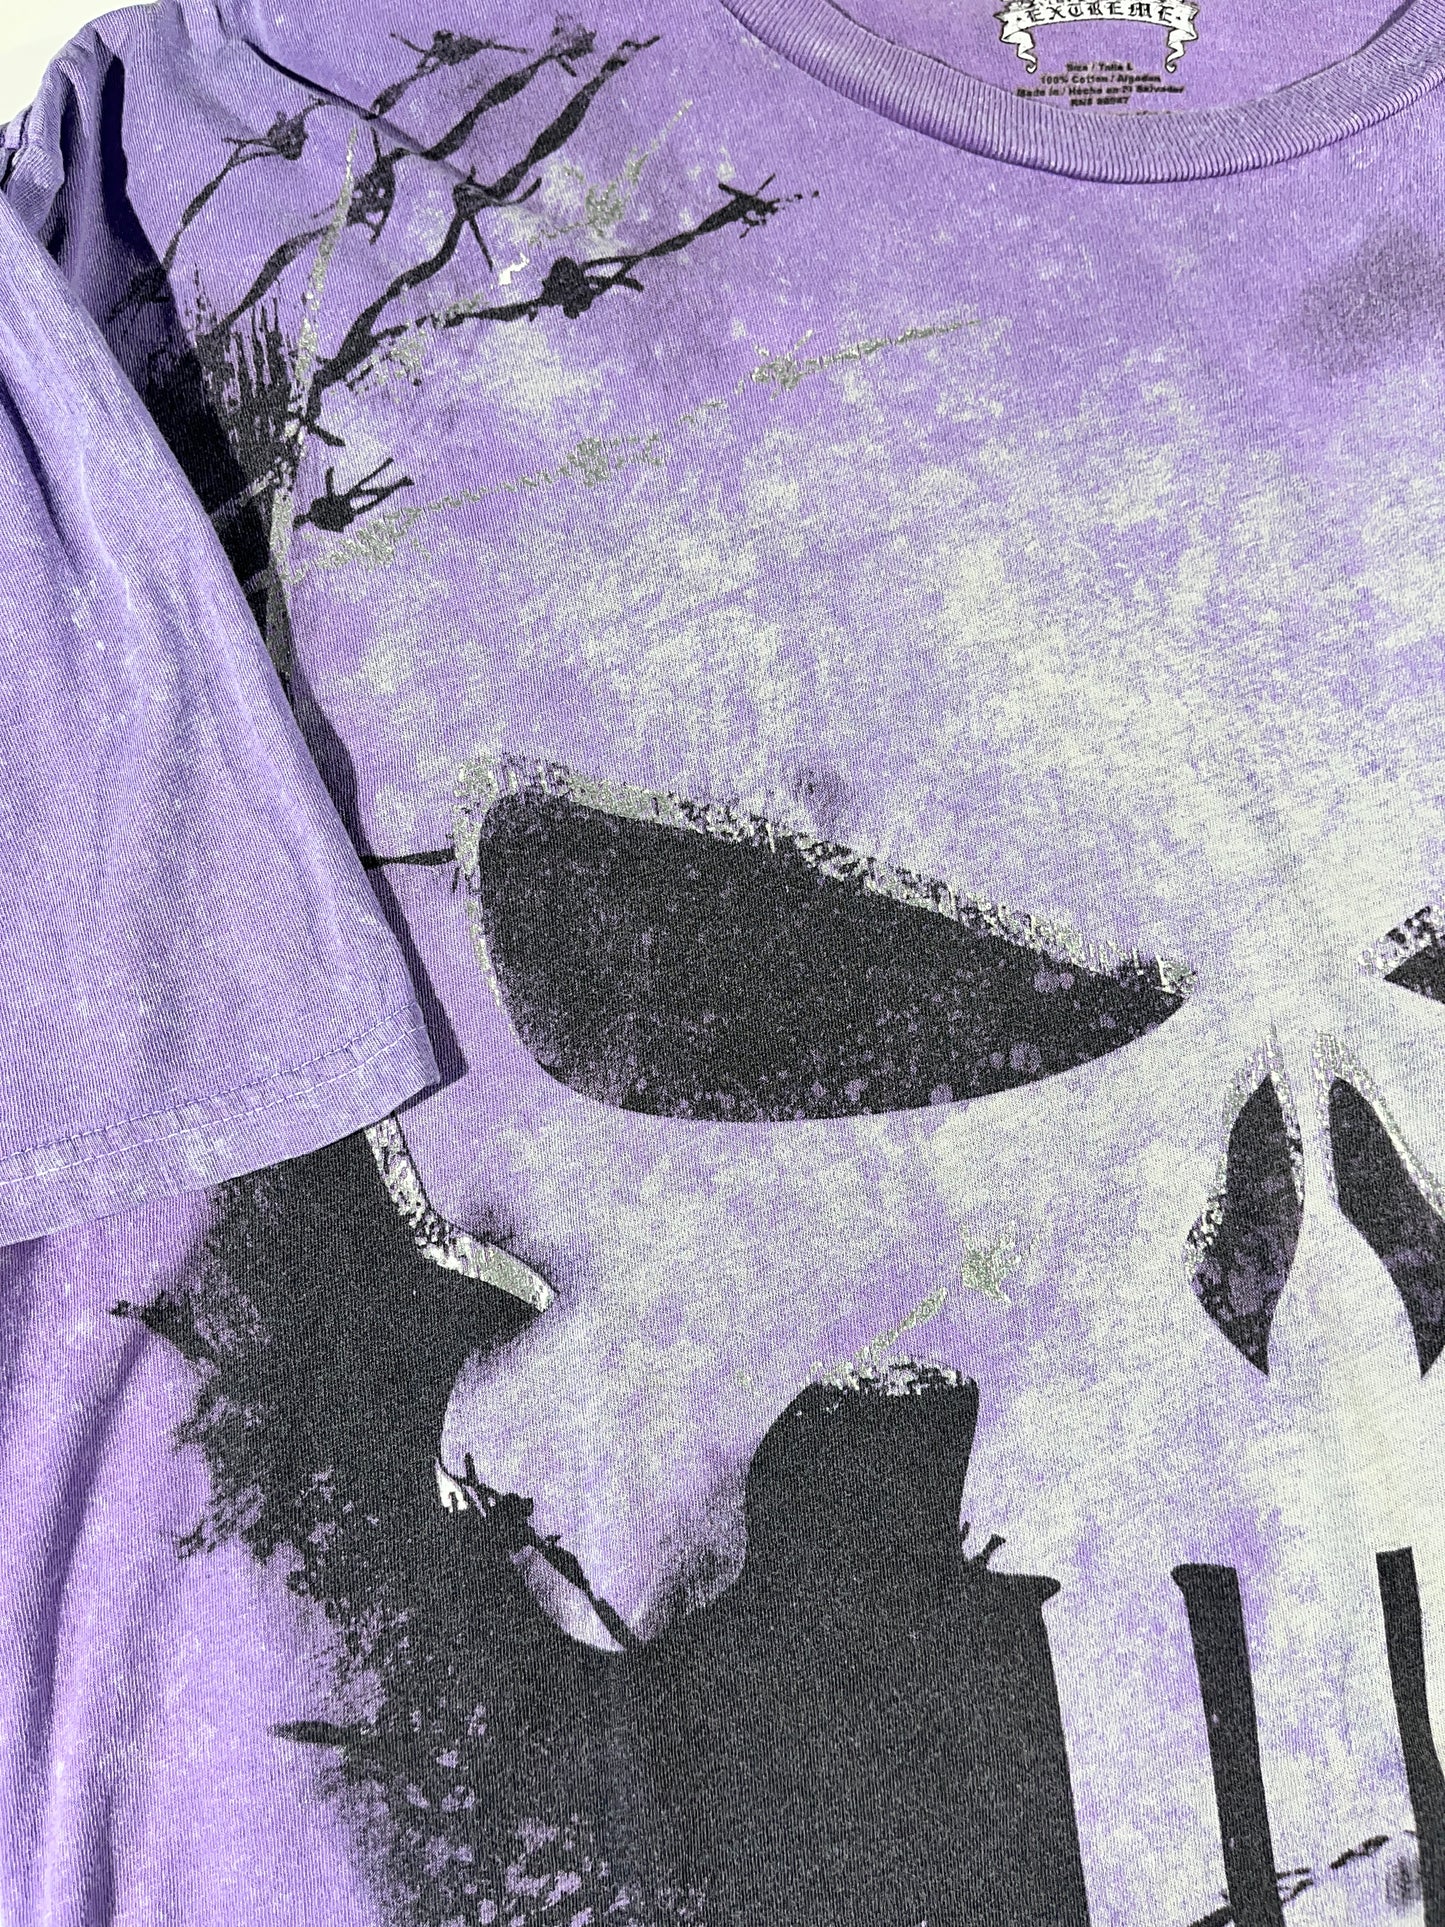 Vintage Purple Punisher T-Shirt Comic Edgy